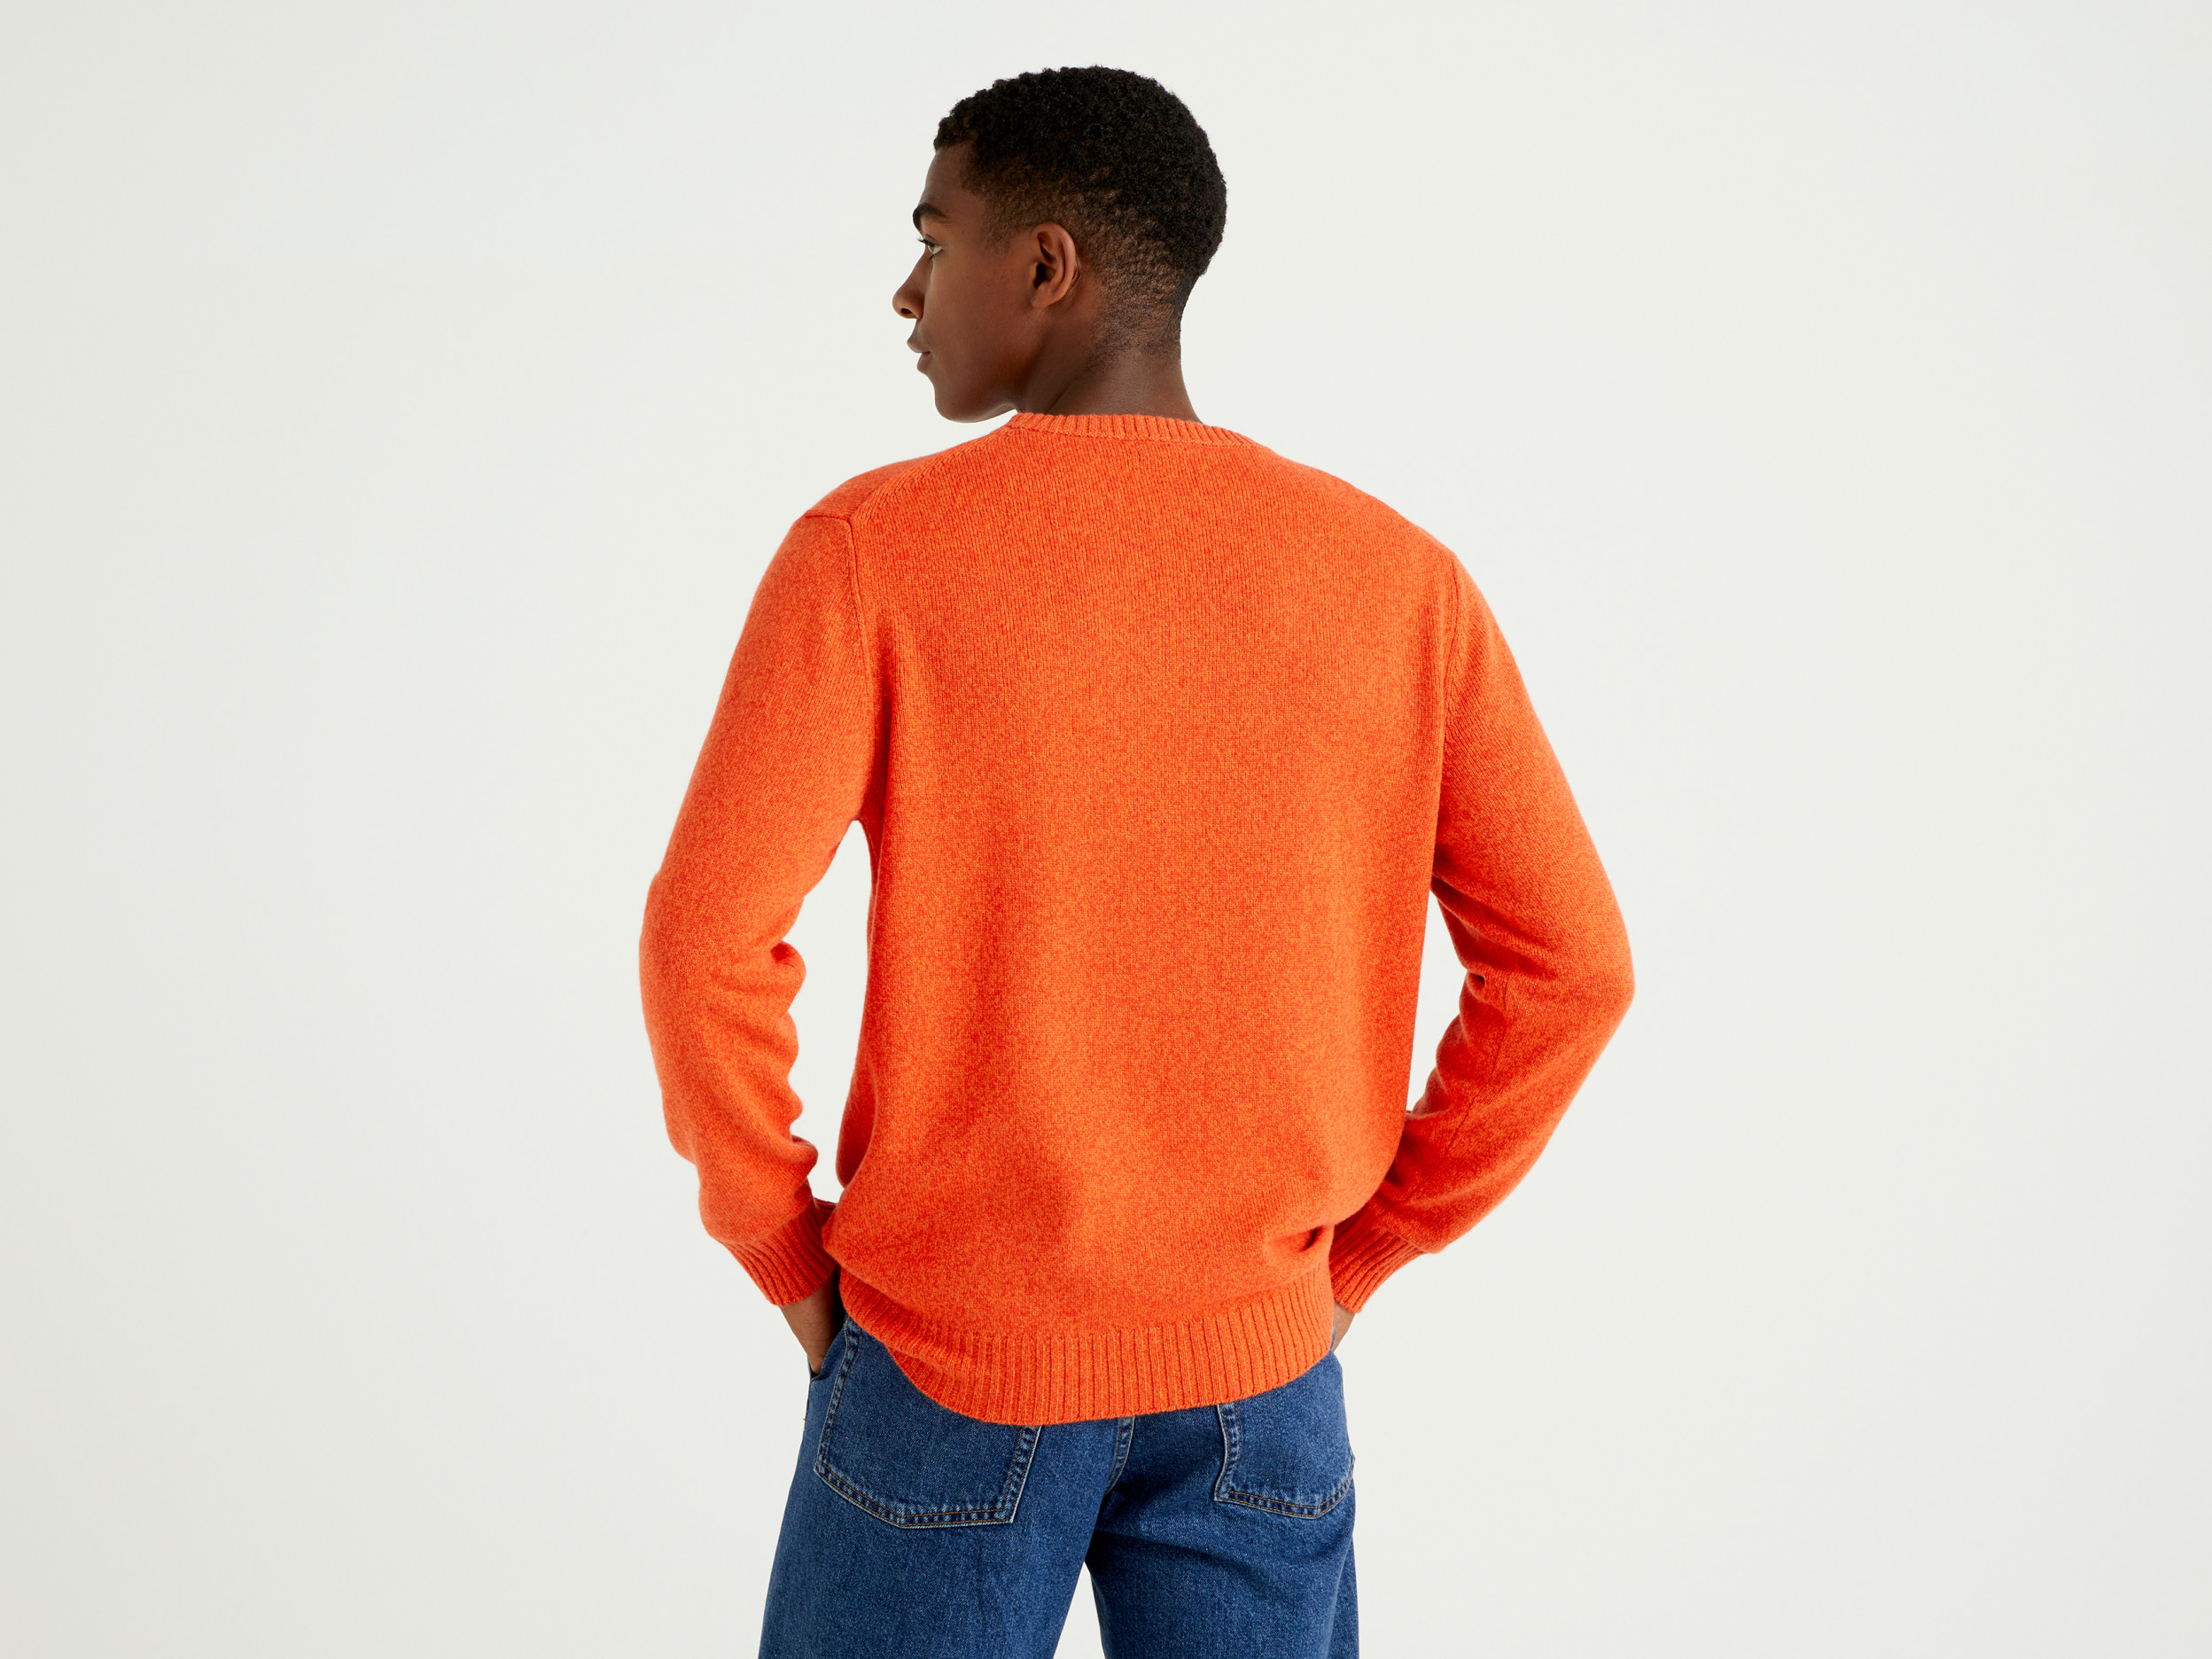 Benetton, Crew Neck Sweater In Cashmere And Wool Blend, Taglia Xxl, Orange, Men